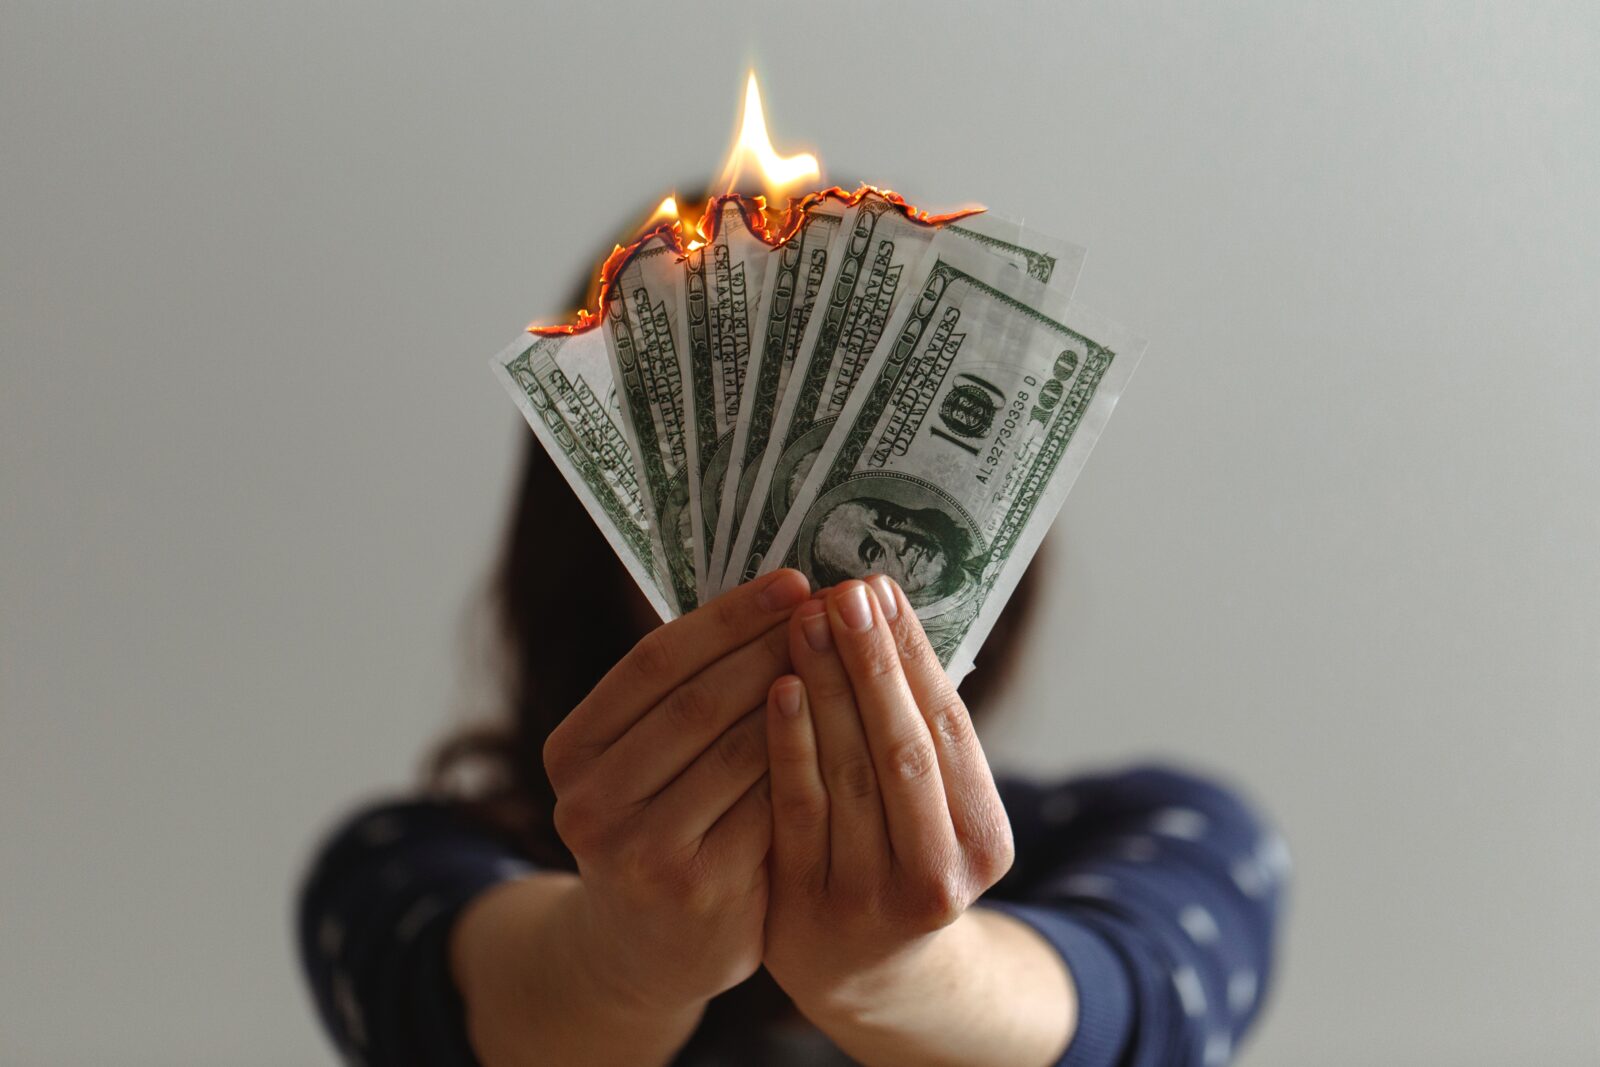 Burning through your cash